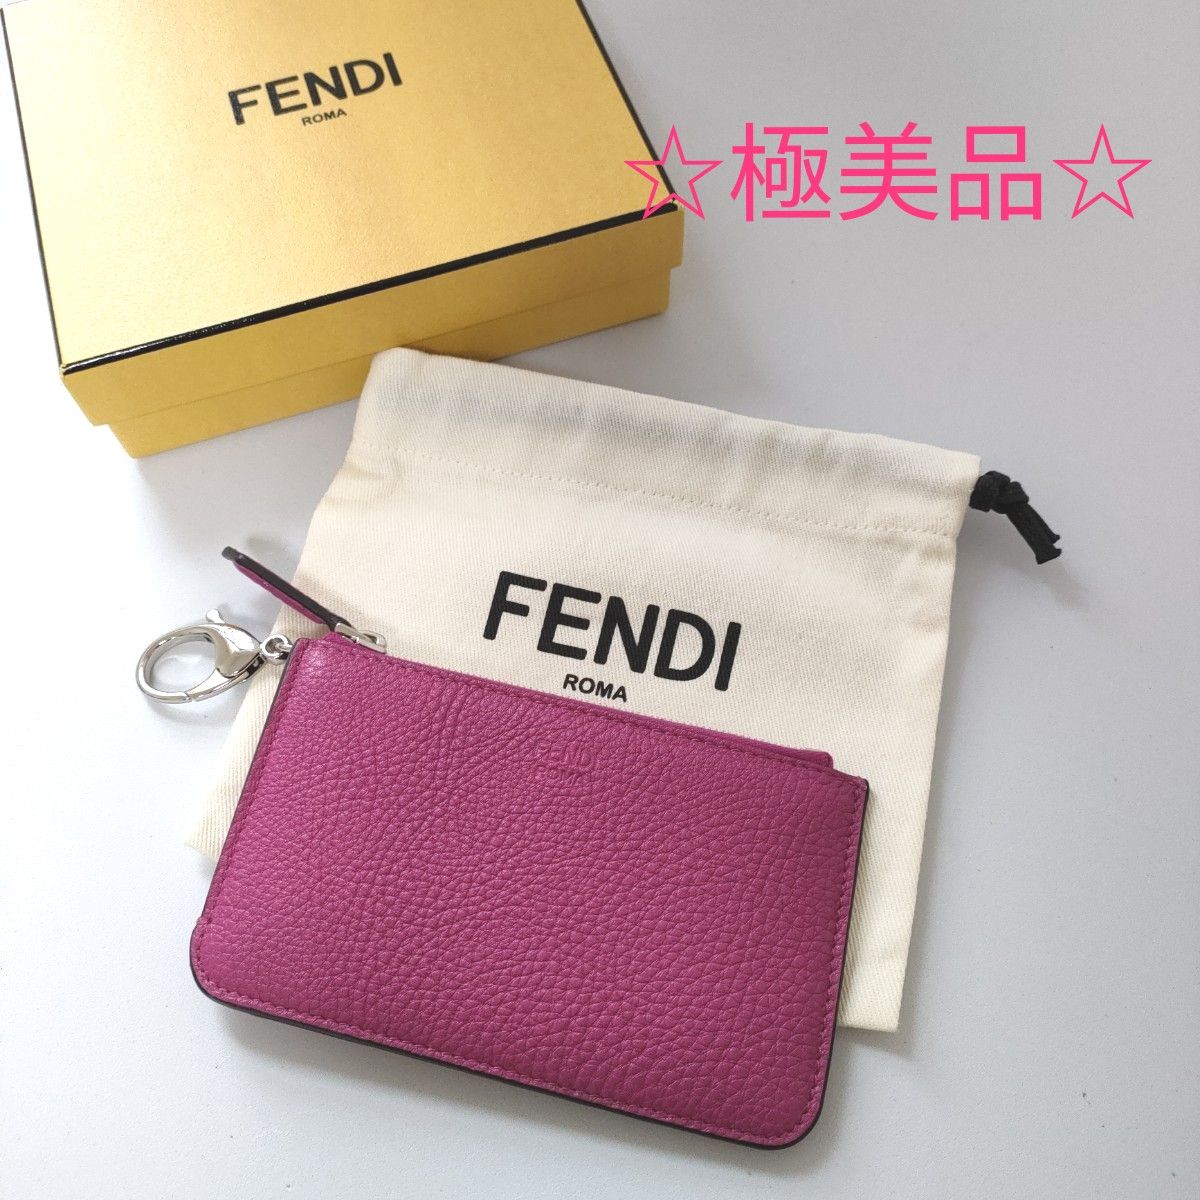 FENDI フェンディ コインケース キーケース 小銭入れ 紫色 Fendi coin